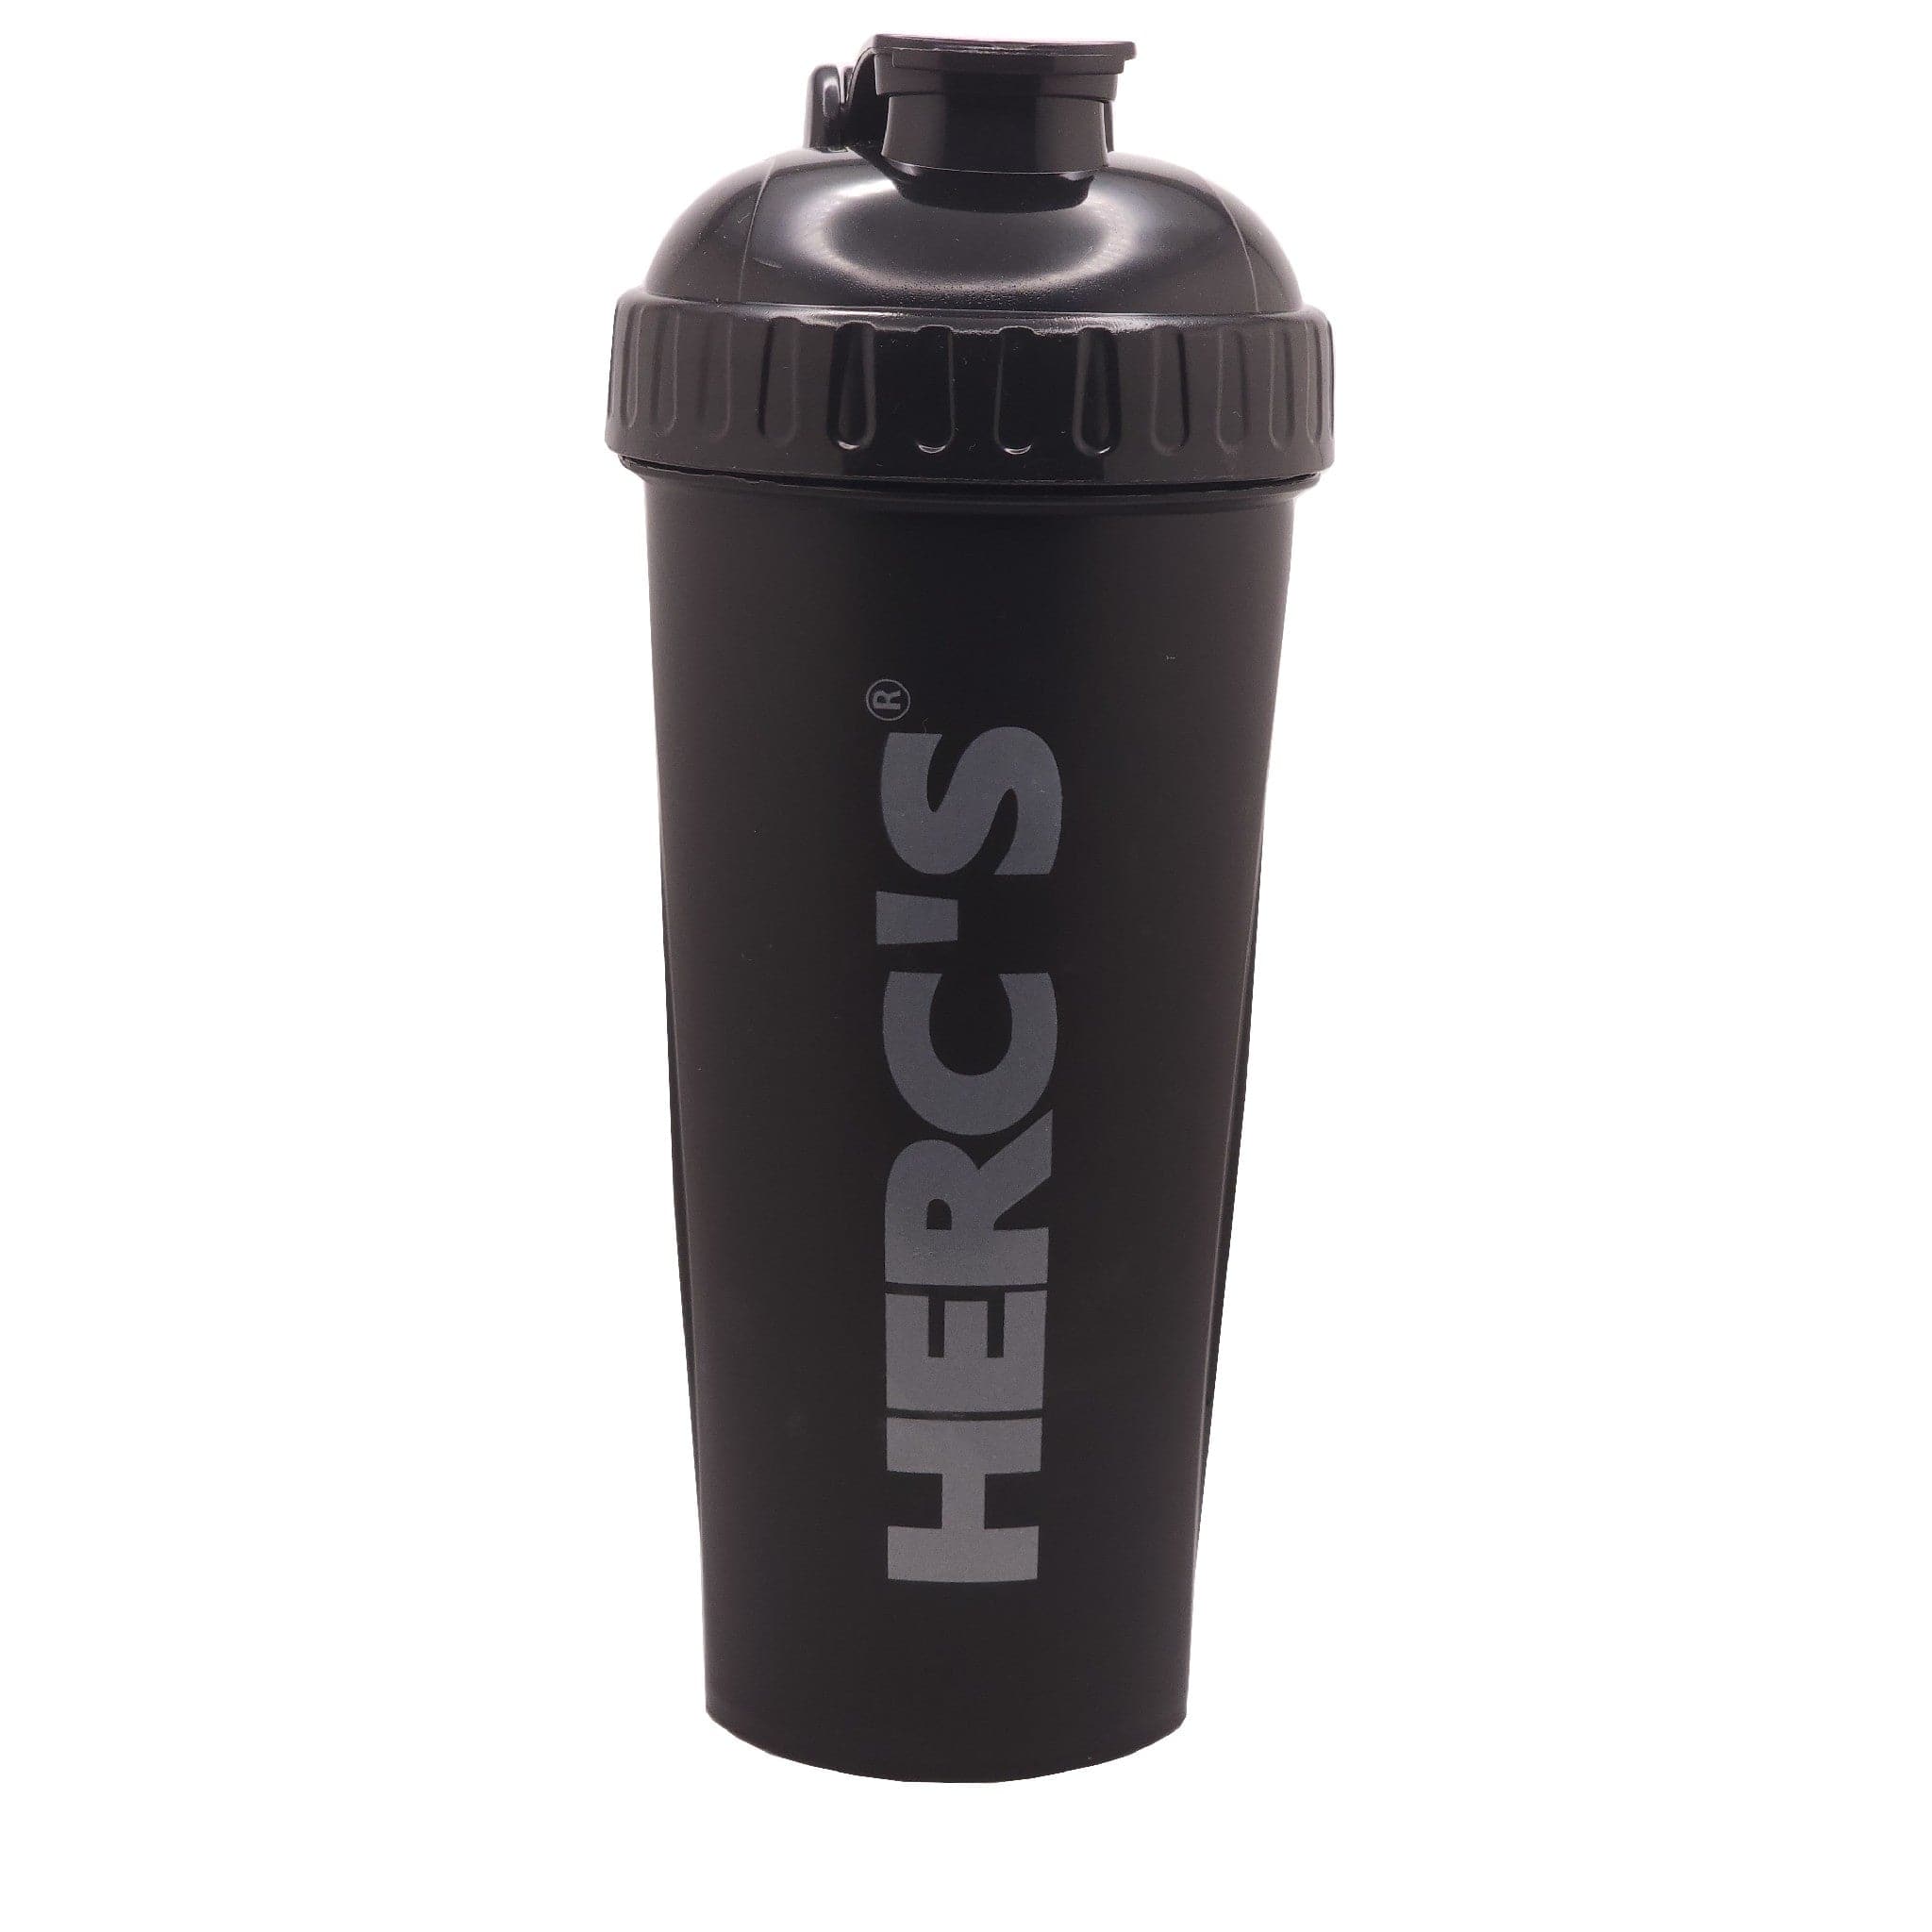 Herc's 700ml Shaker Cup